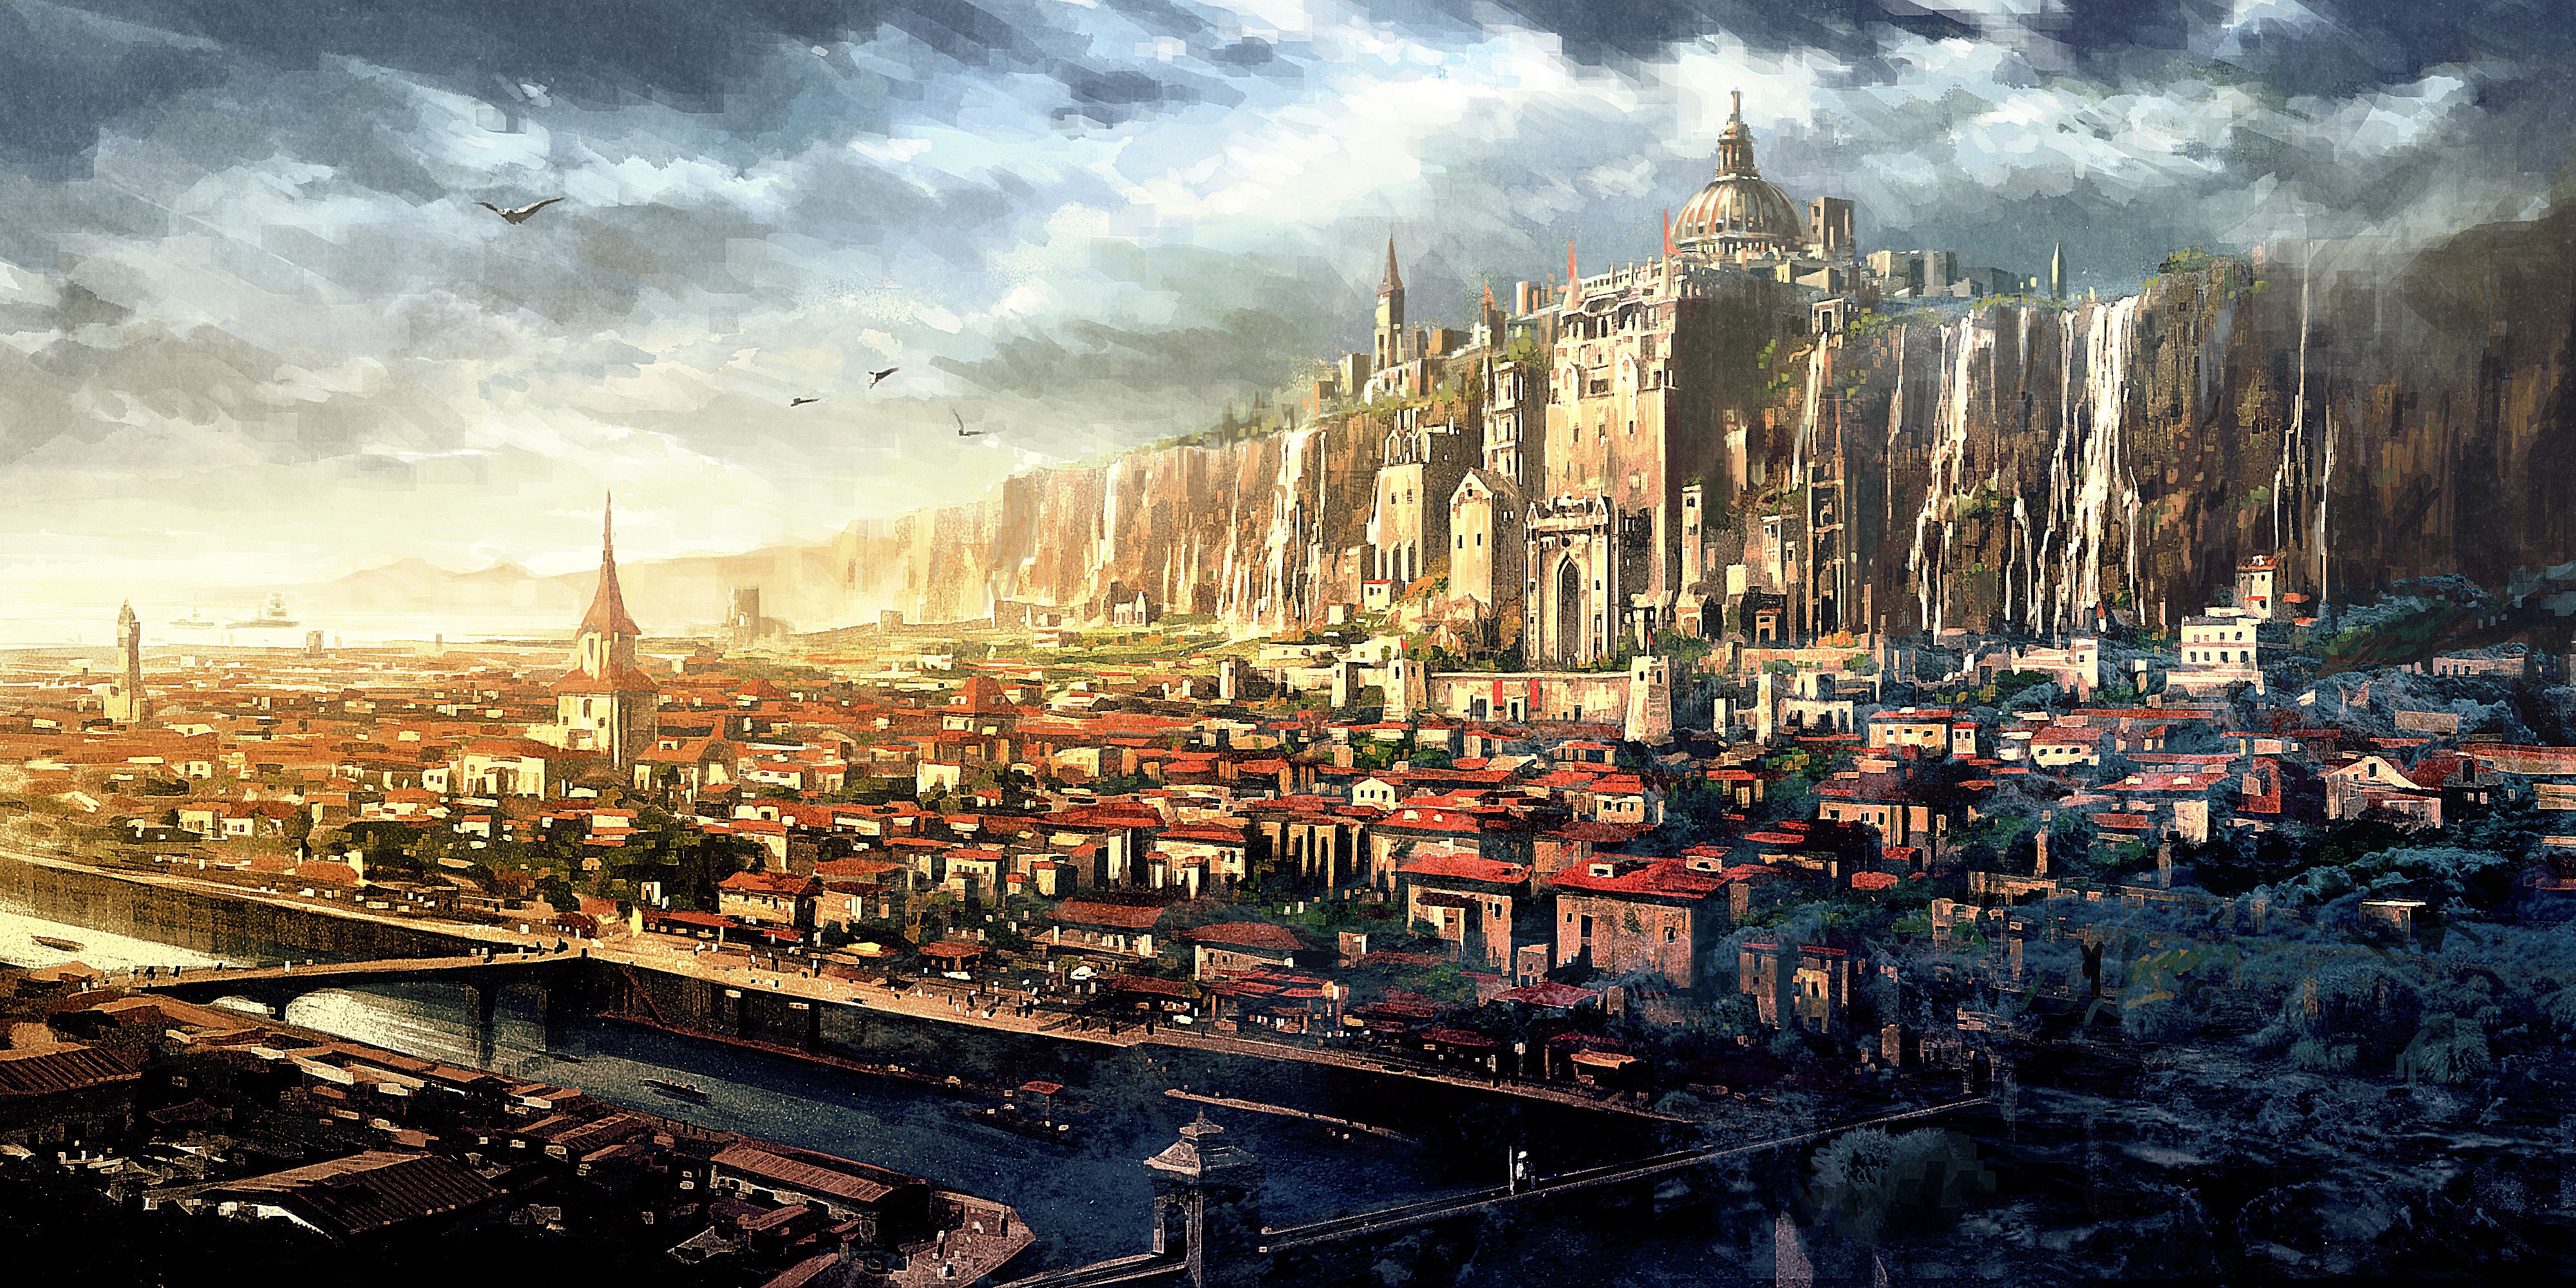 PROJECT PHOENIX fantasy anime game city h wallpaperx2000. Cityscape wallpaper, Anime city, Fantasy city